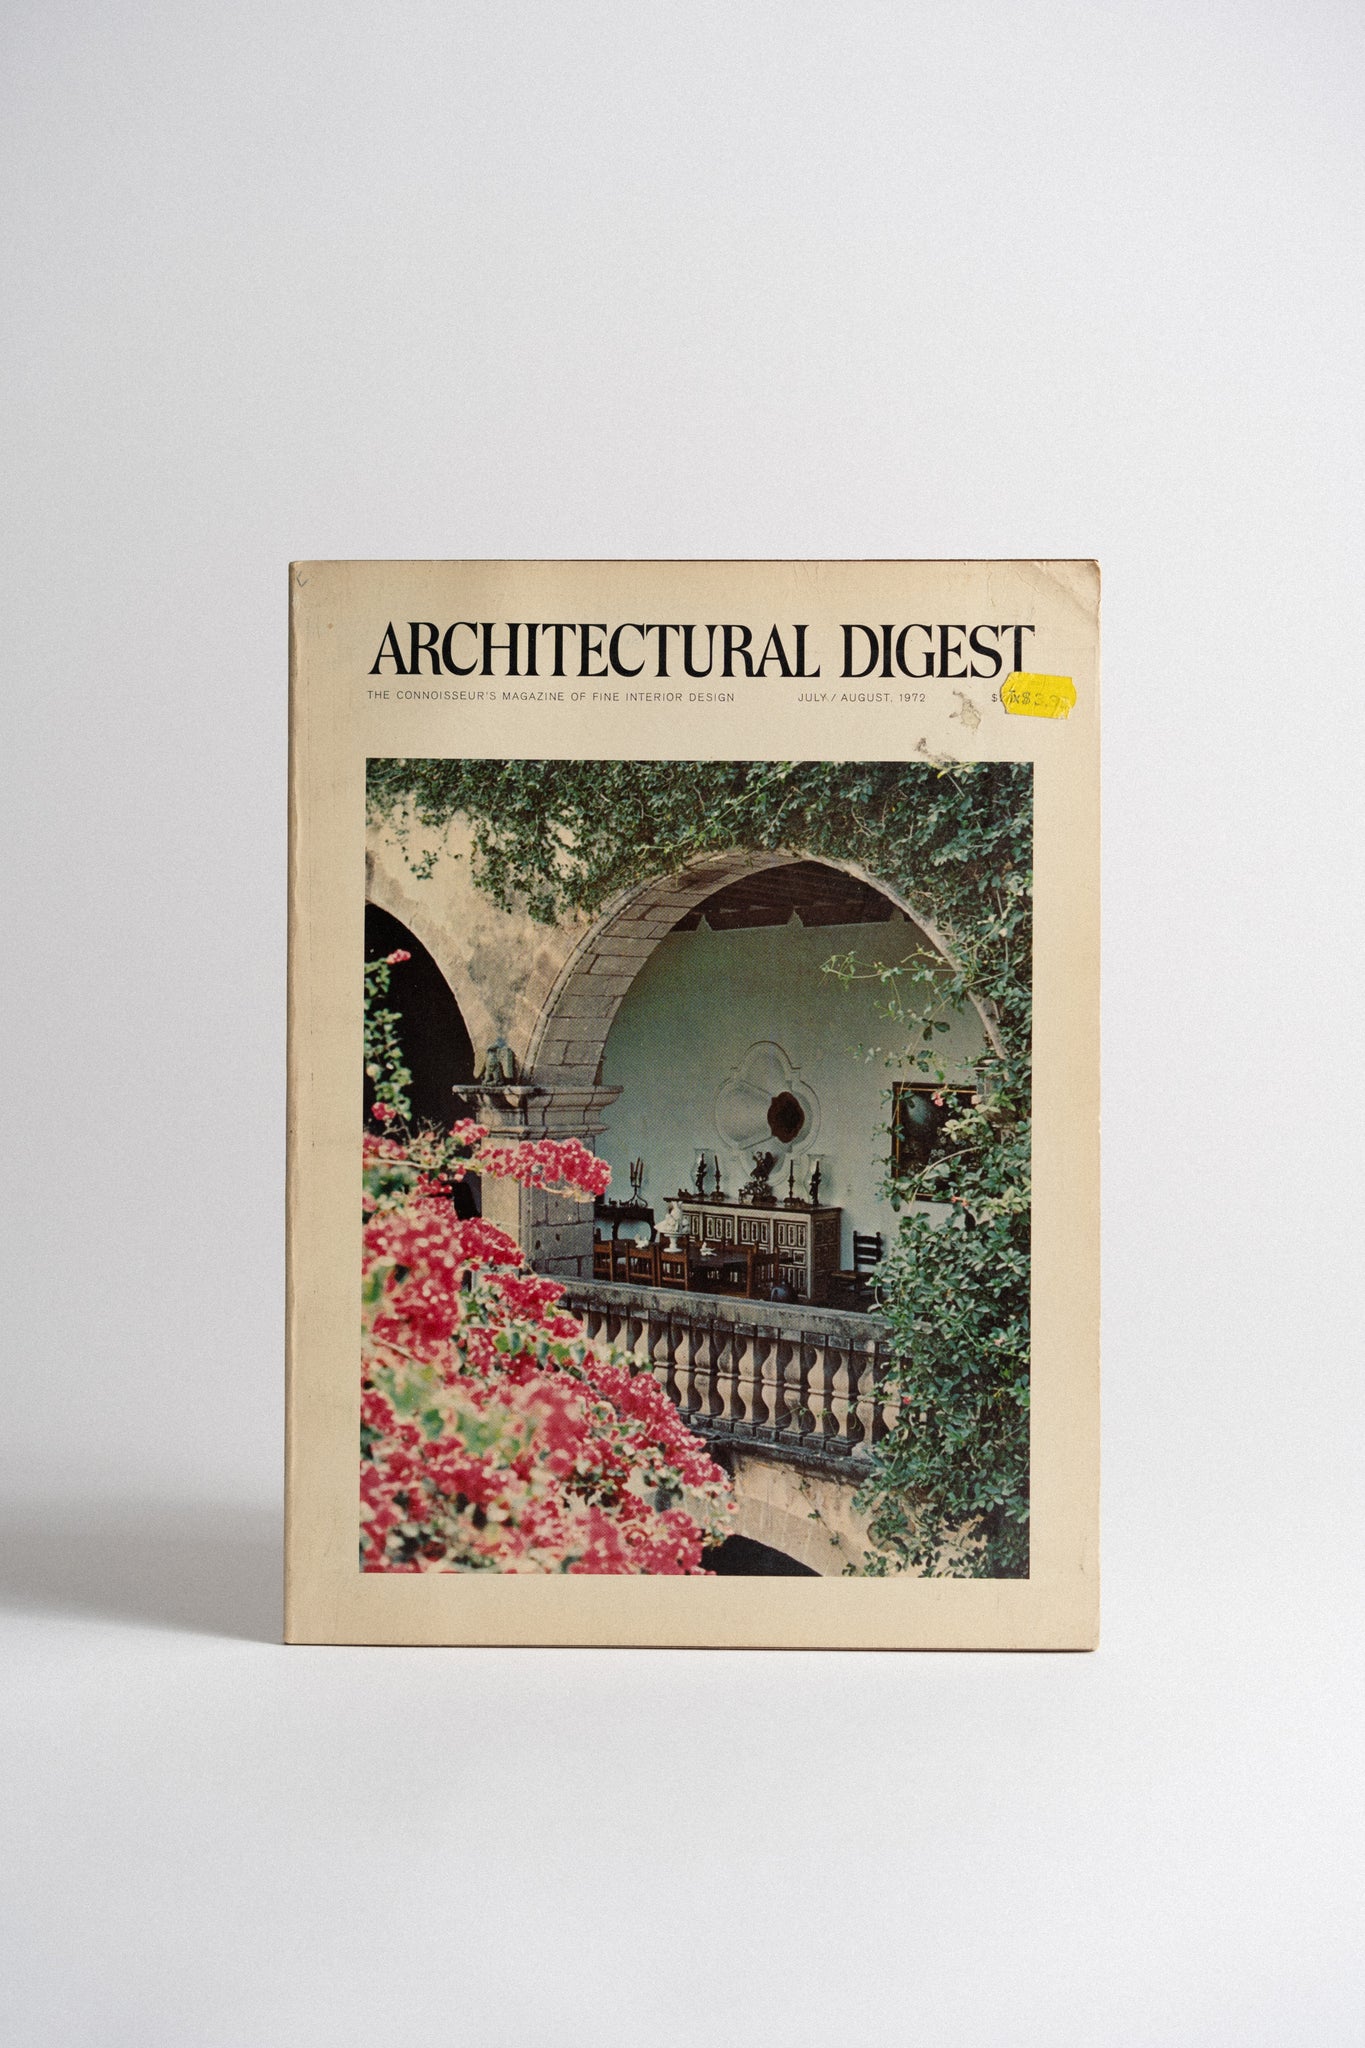 Architectural Digest - Jul/Aug 1972